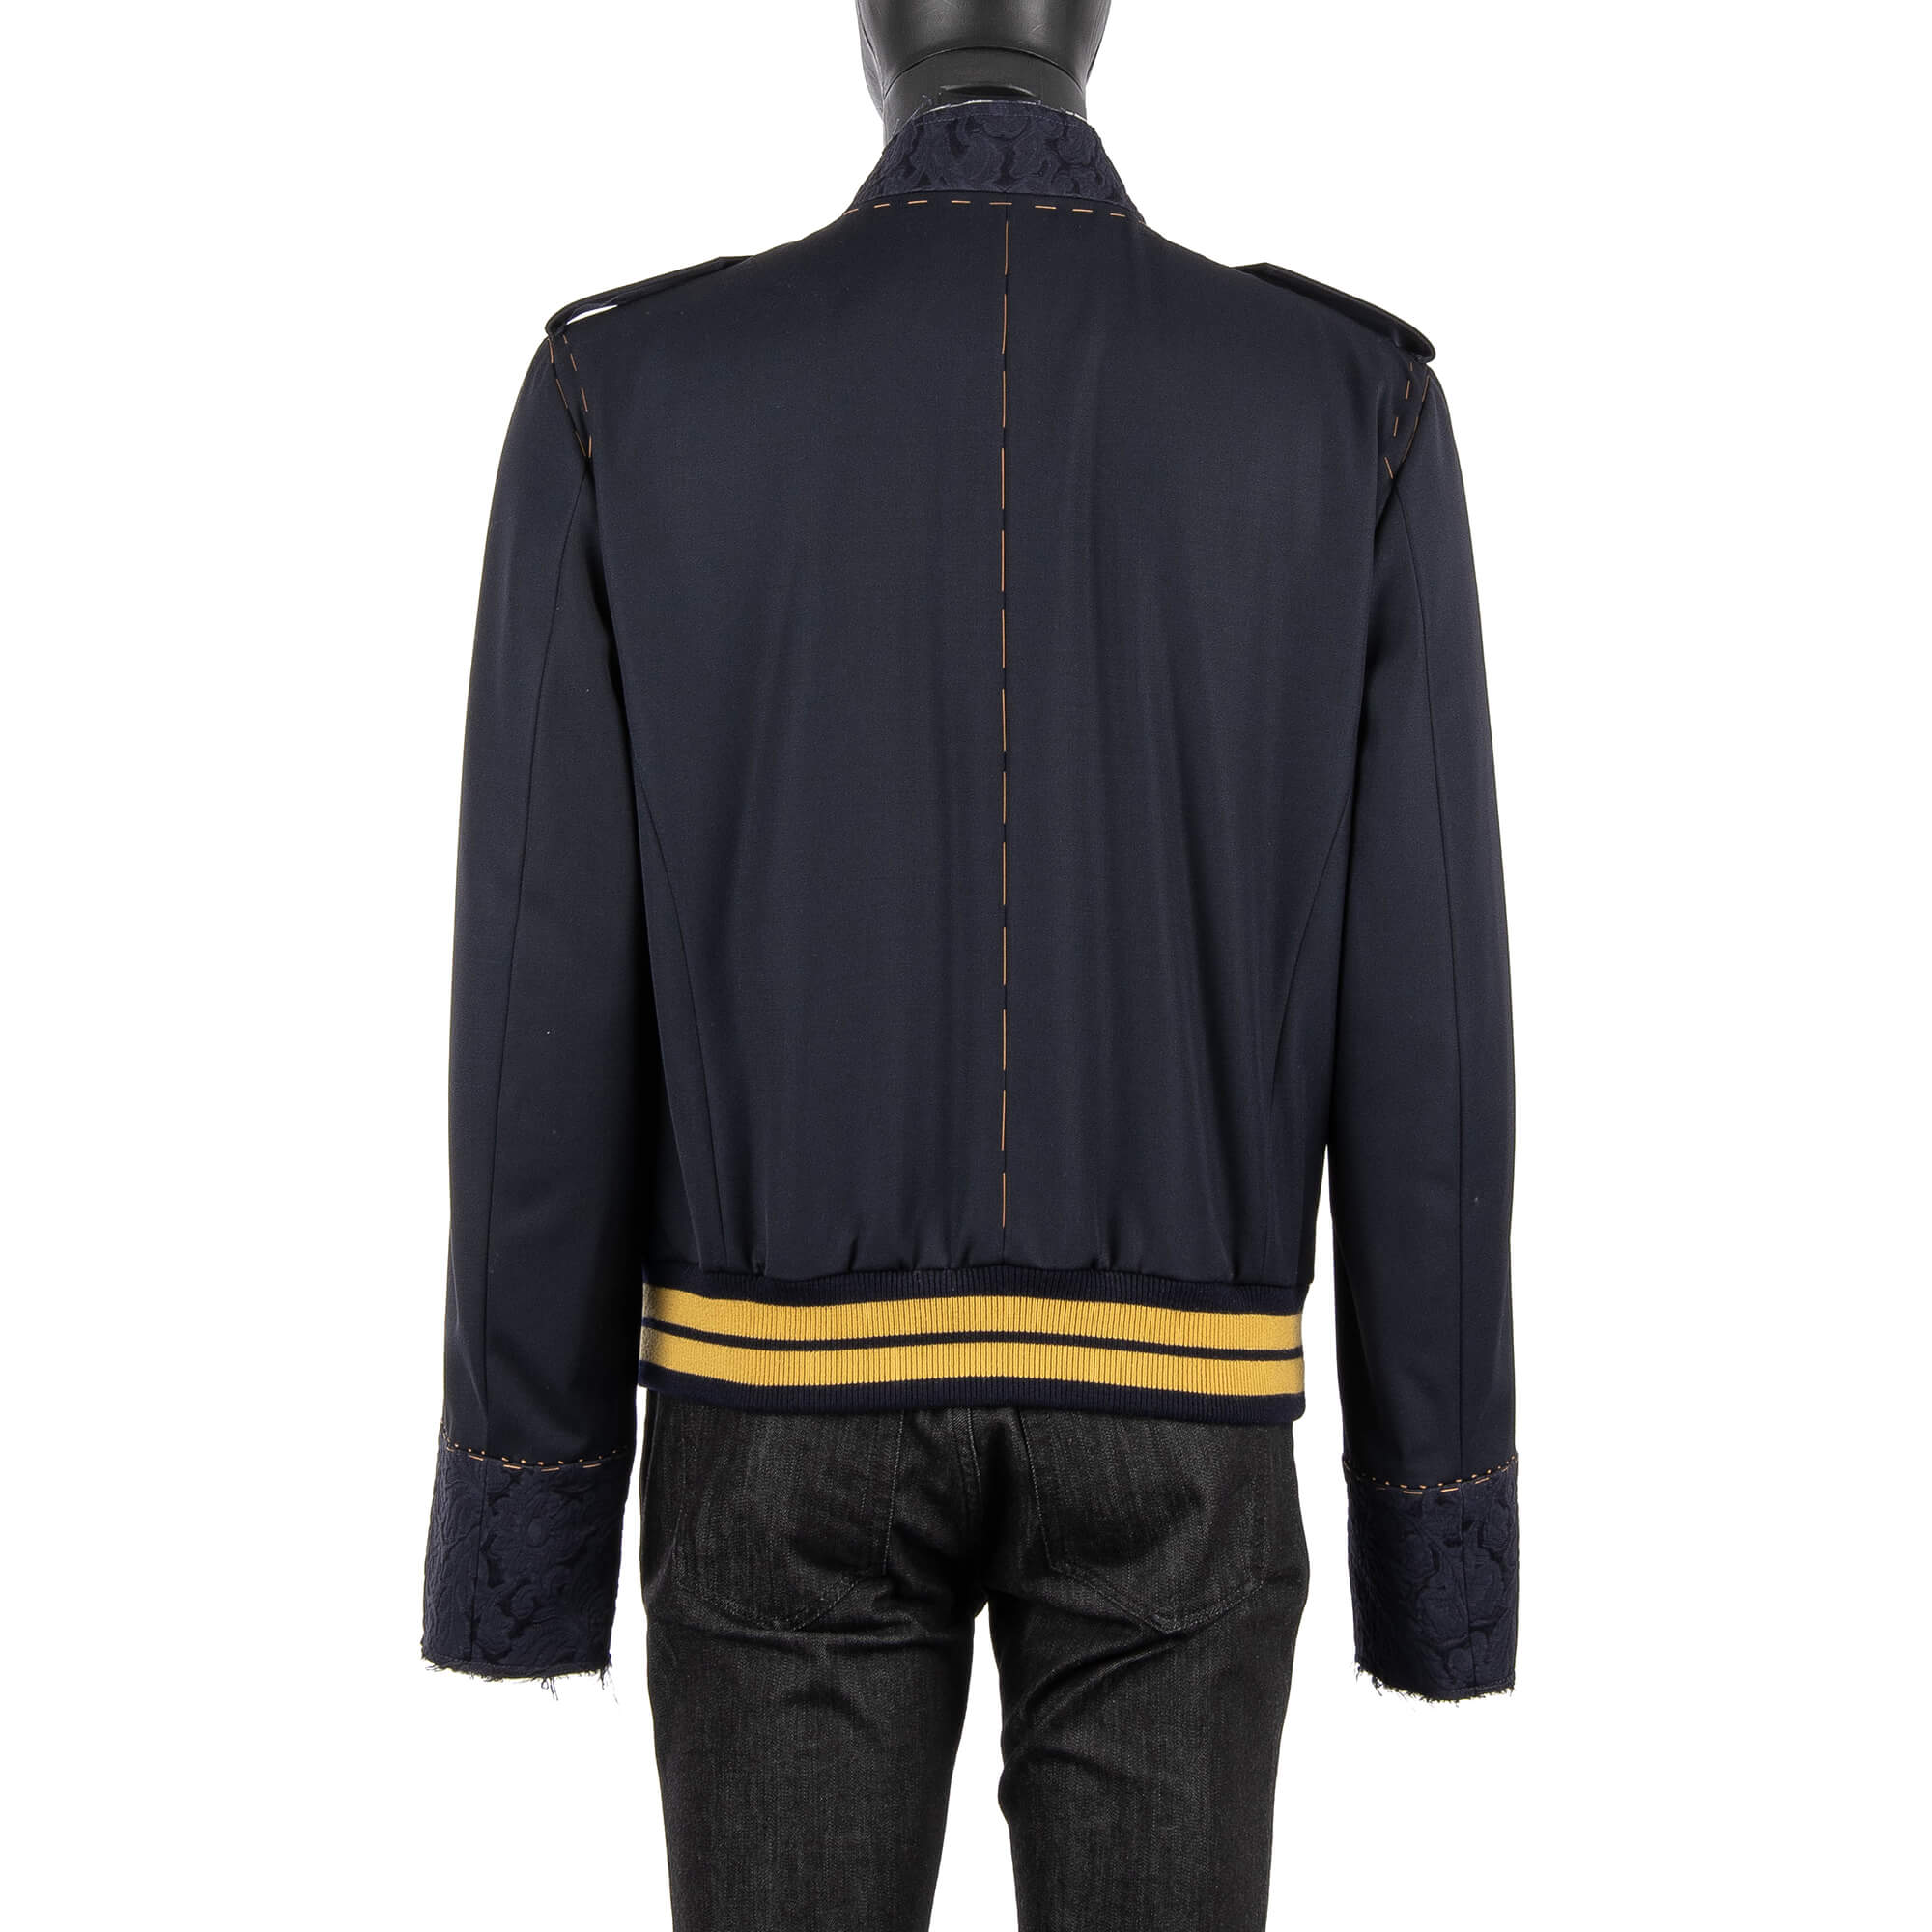 DOLCE-GABBANA-Royal-Military-Uniform-Short-Jacket-Blue-Gold-3.jpg